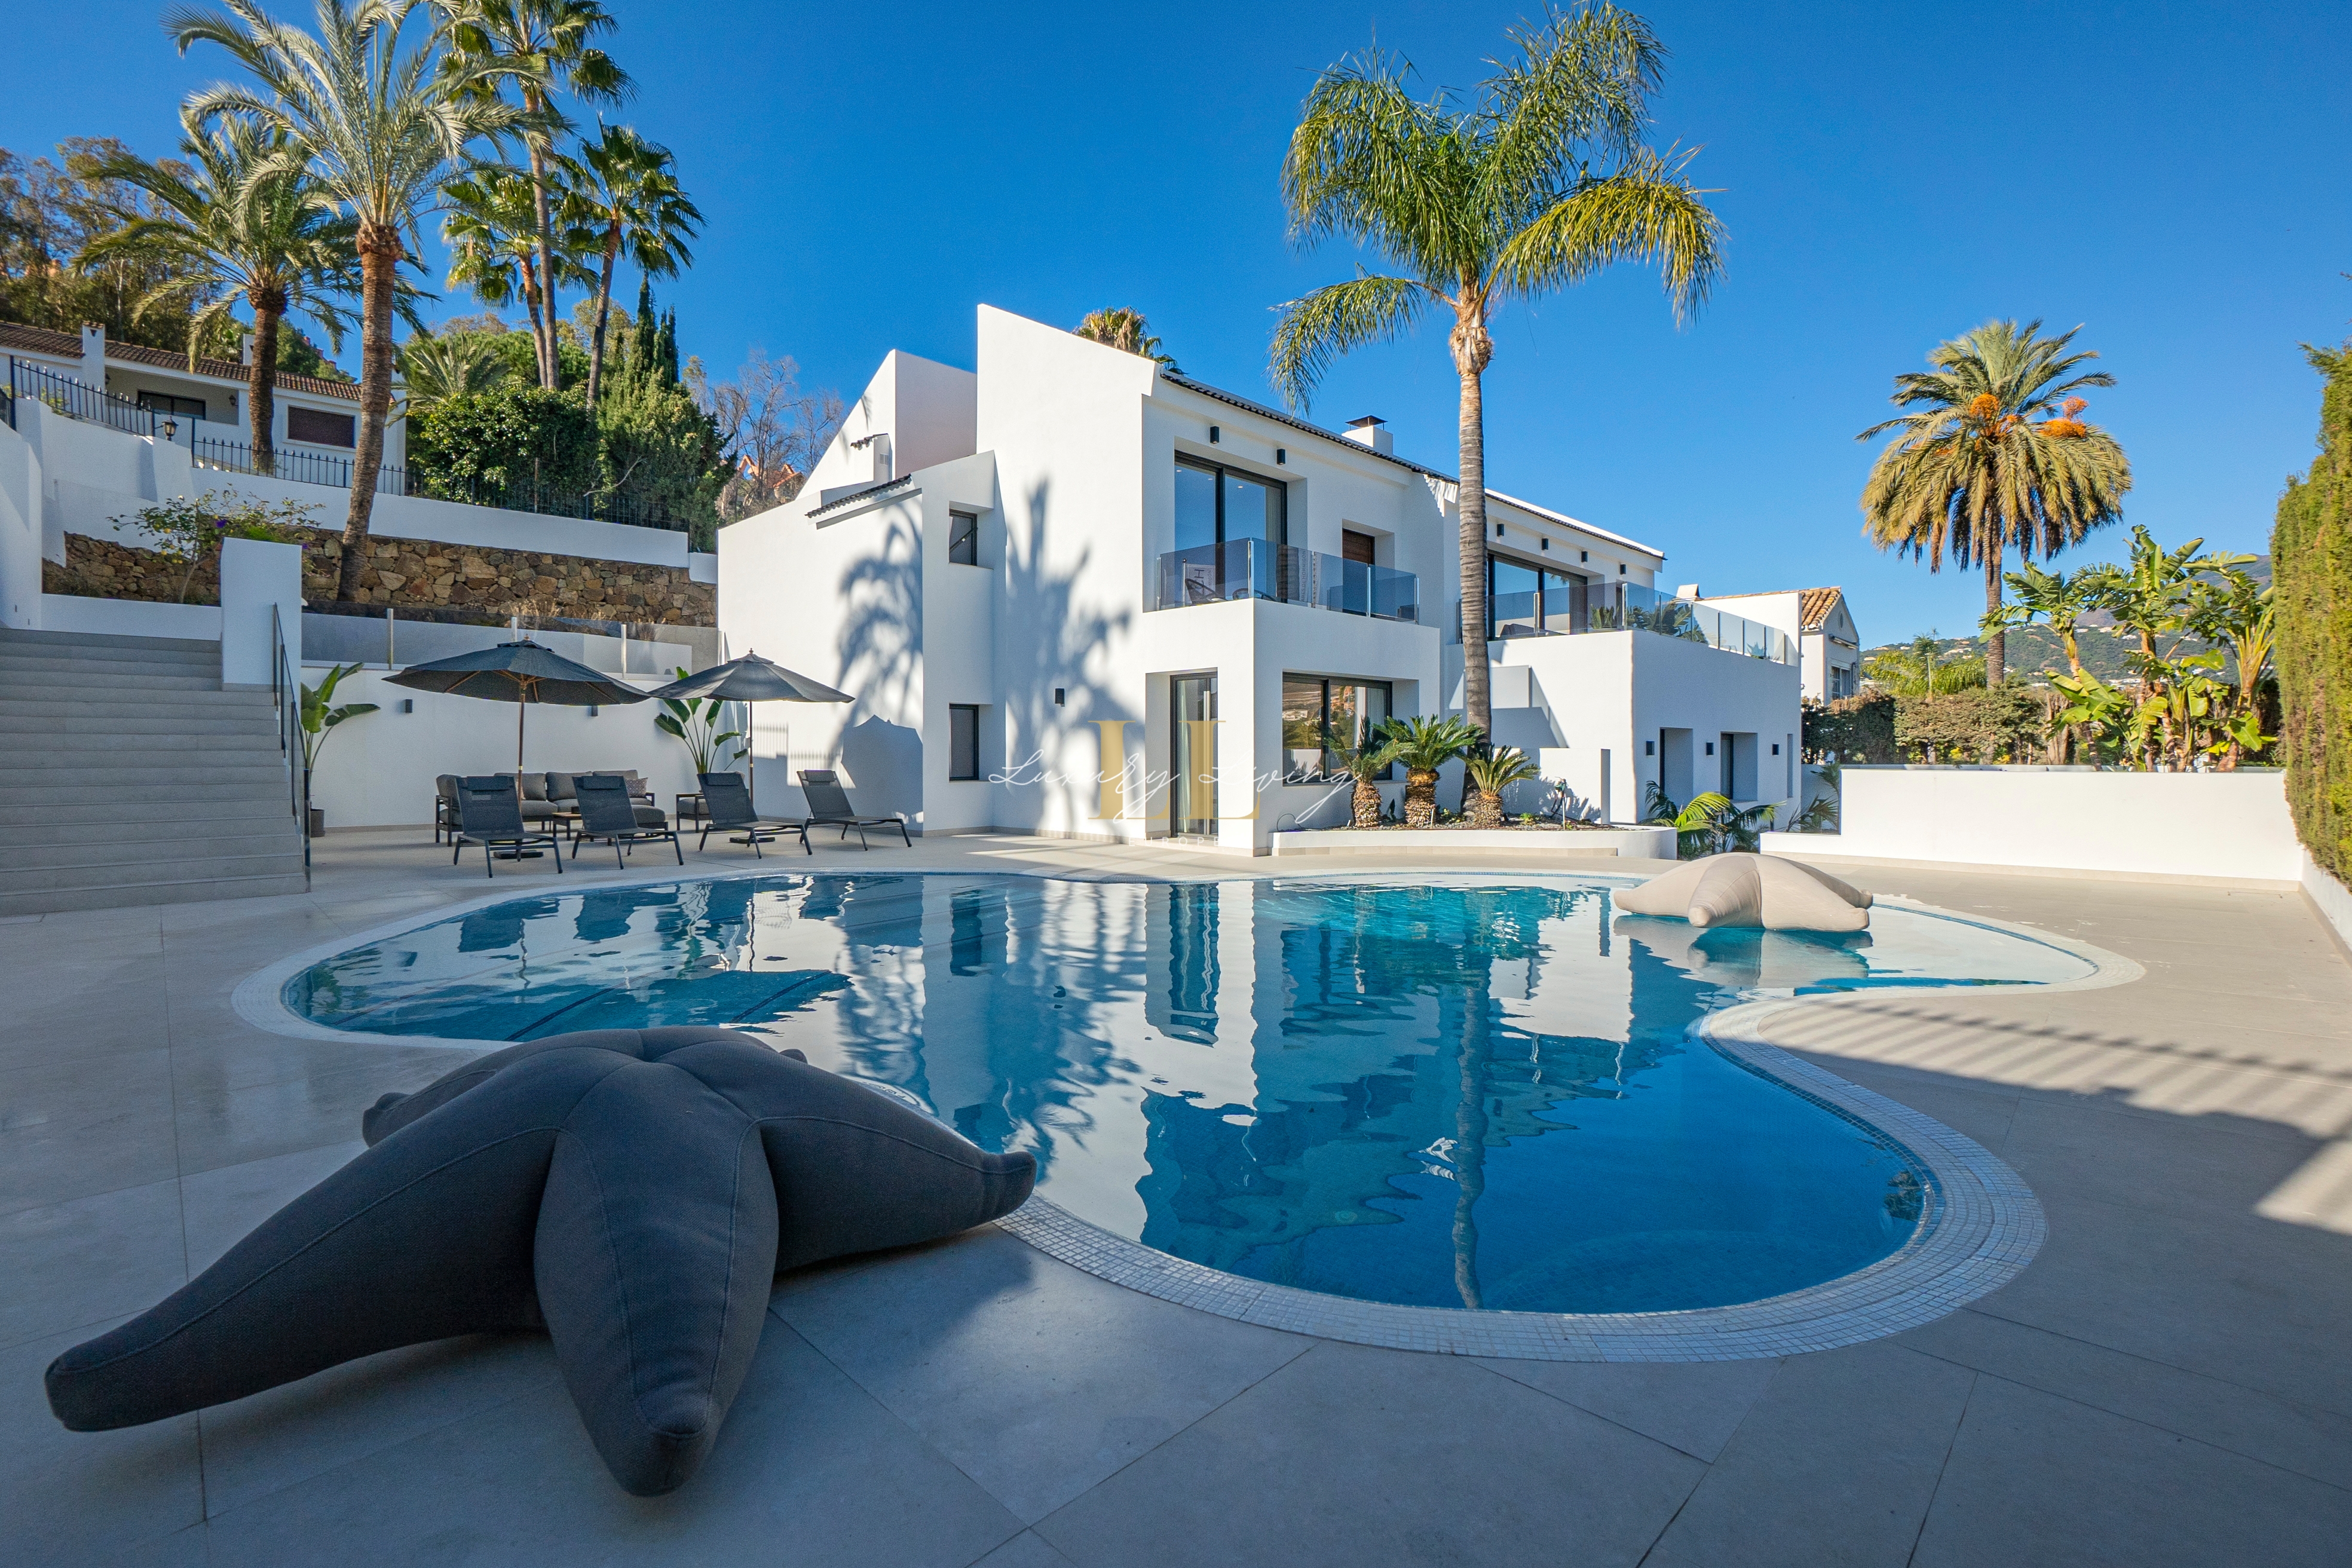 Villa Deluca Accommodation in Marbella